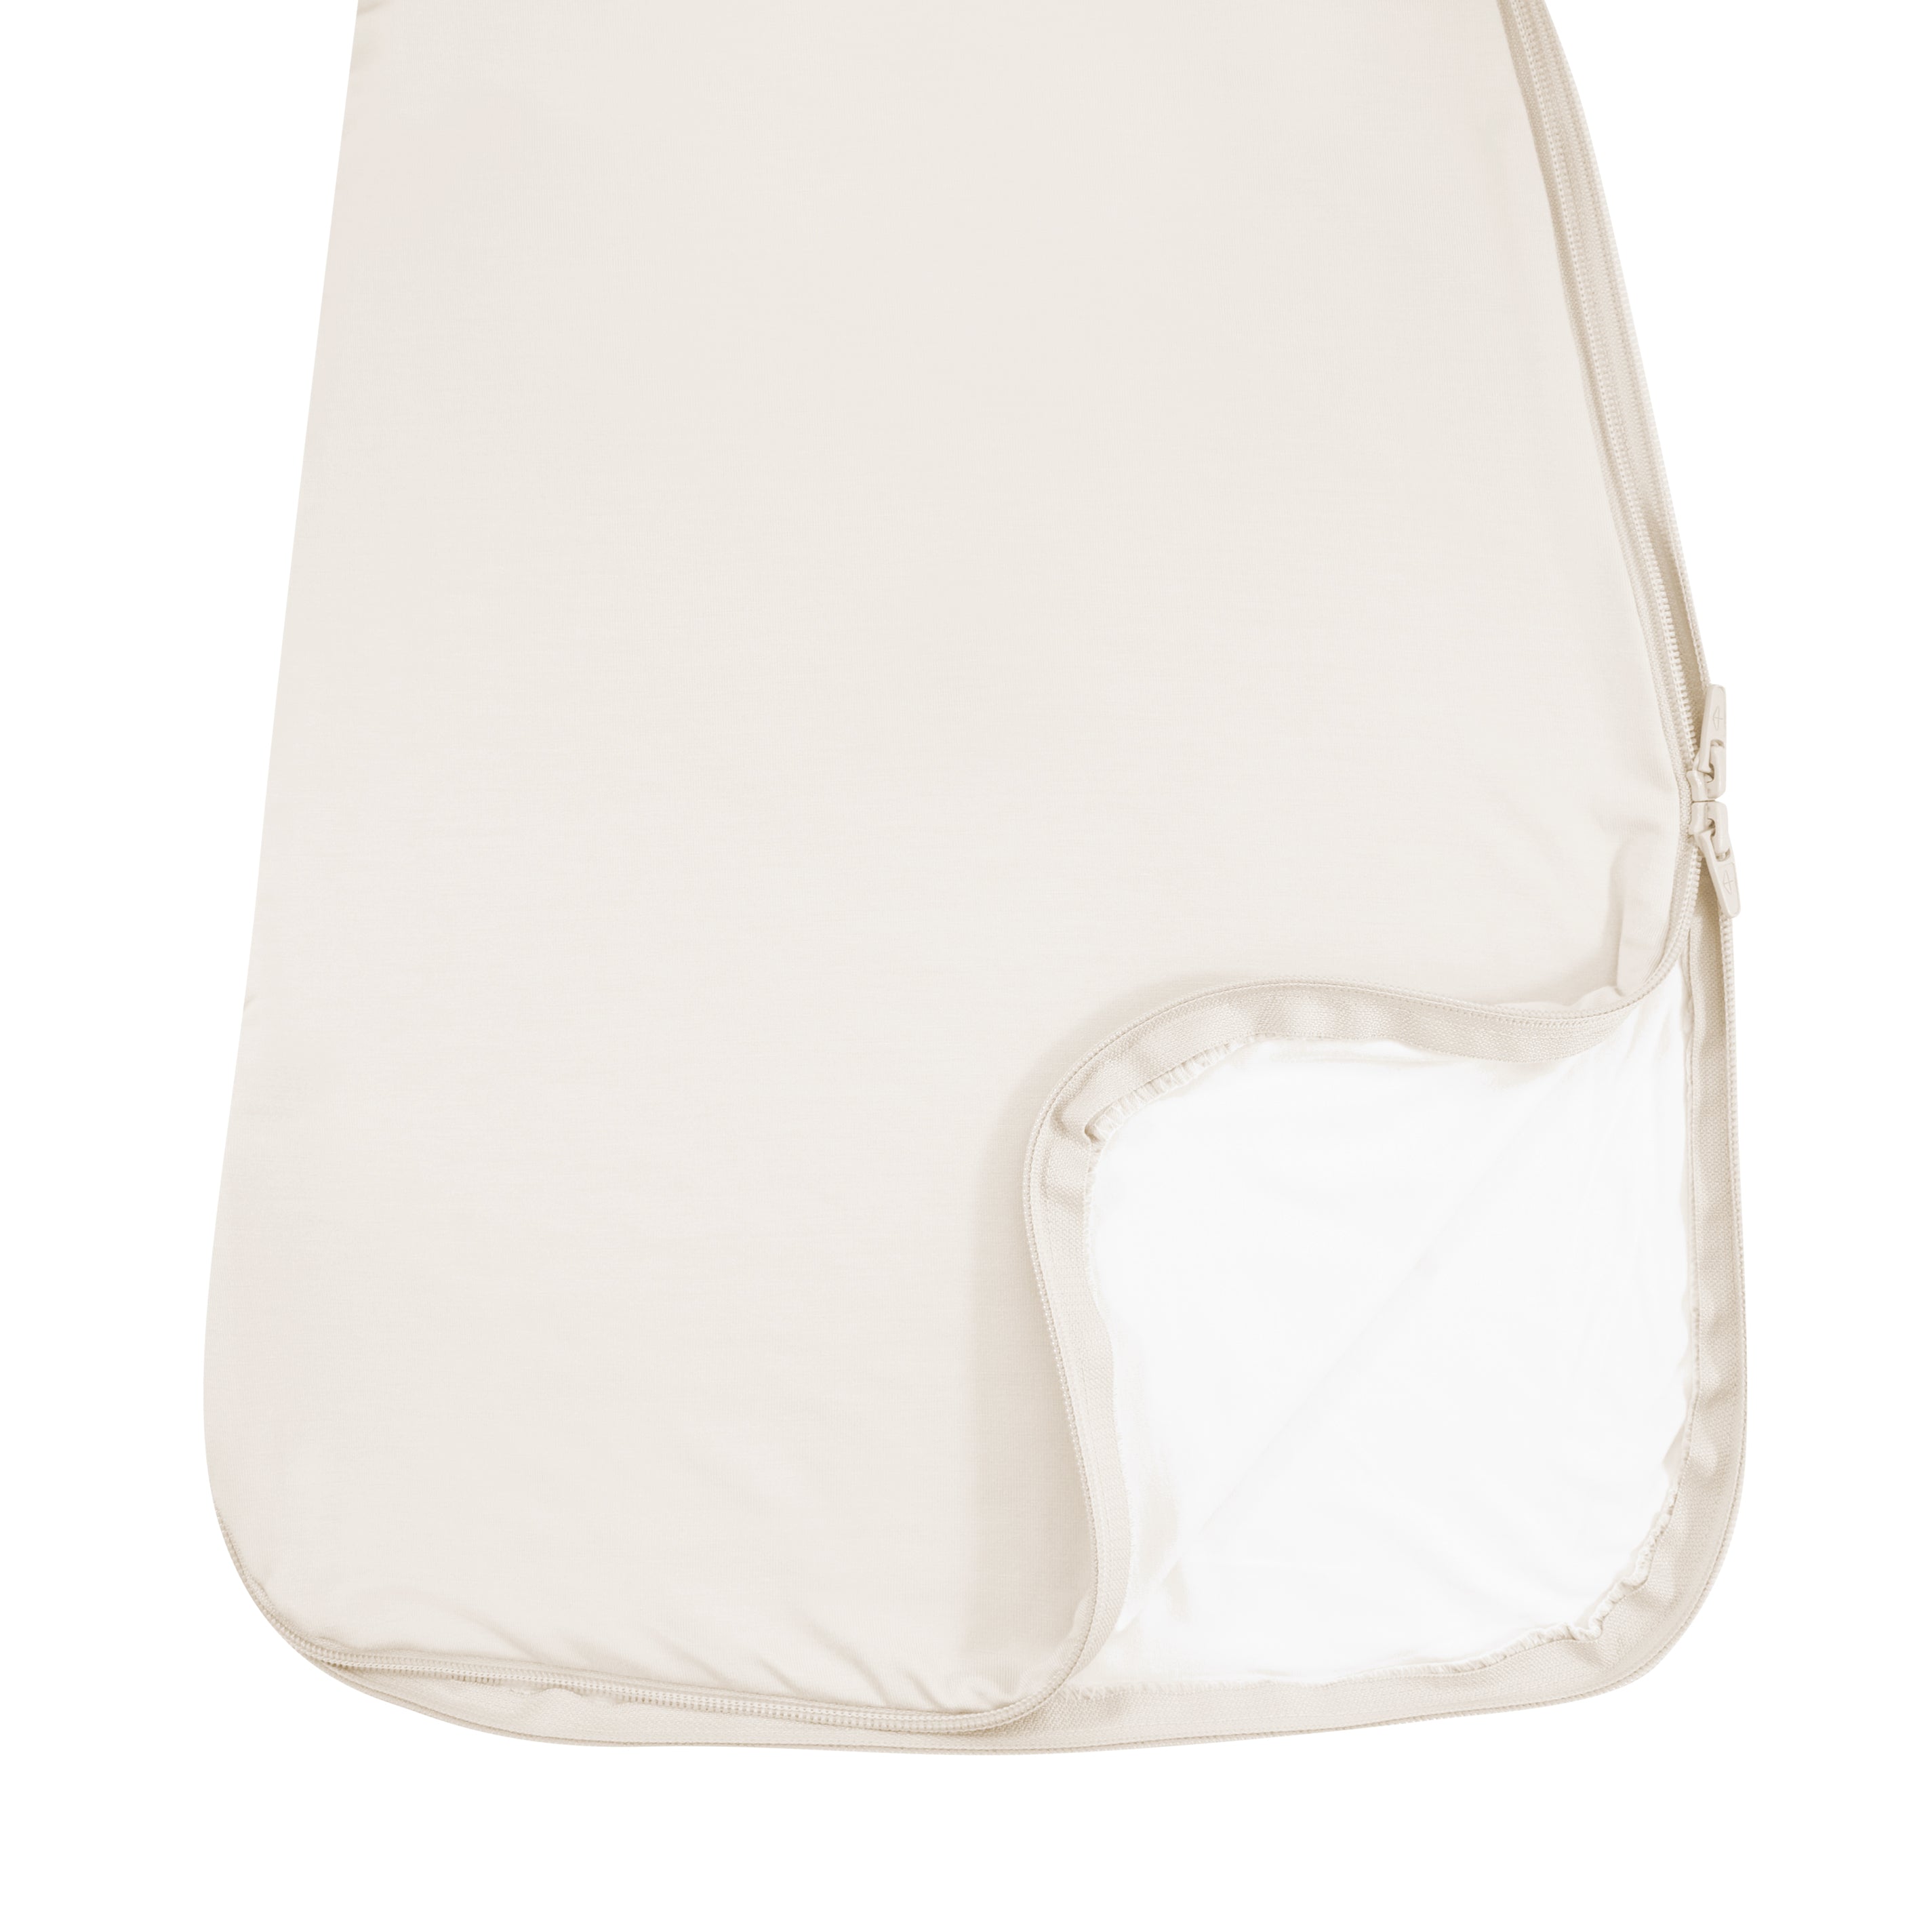 Kyte Baby bamboo Sleep Bag in Oat 0.5 double zipper